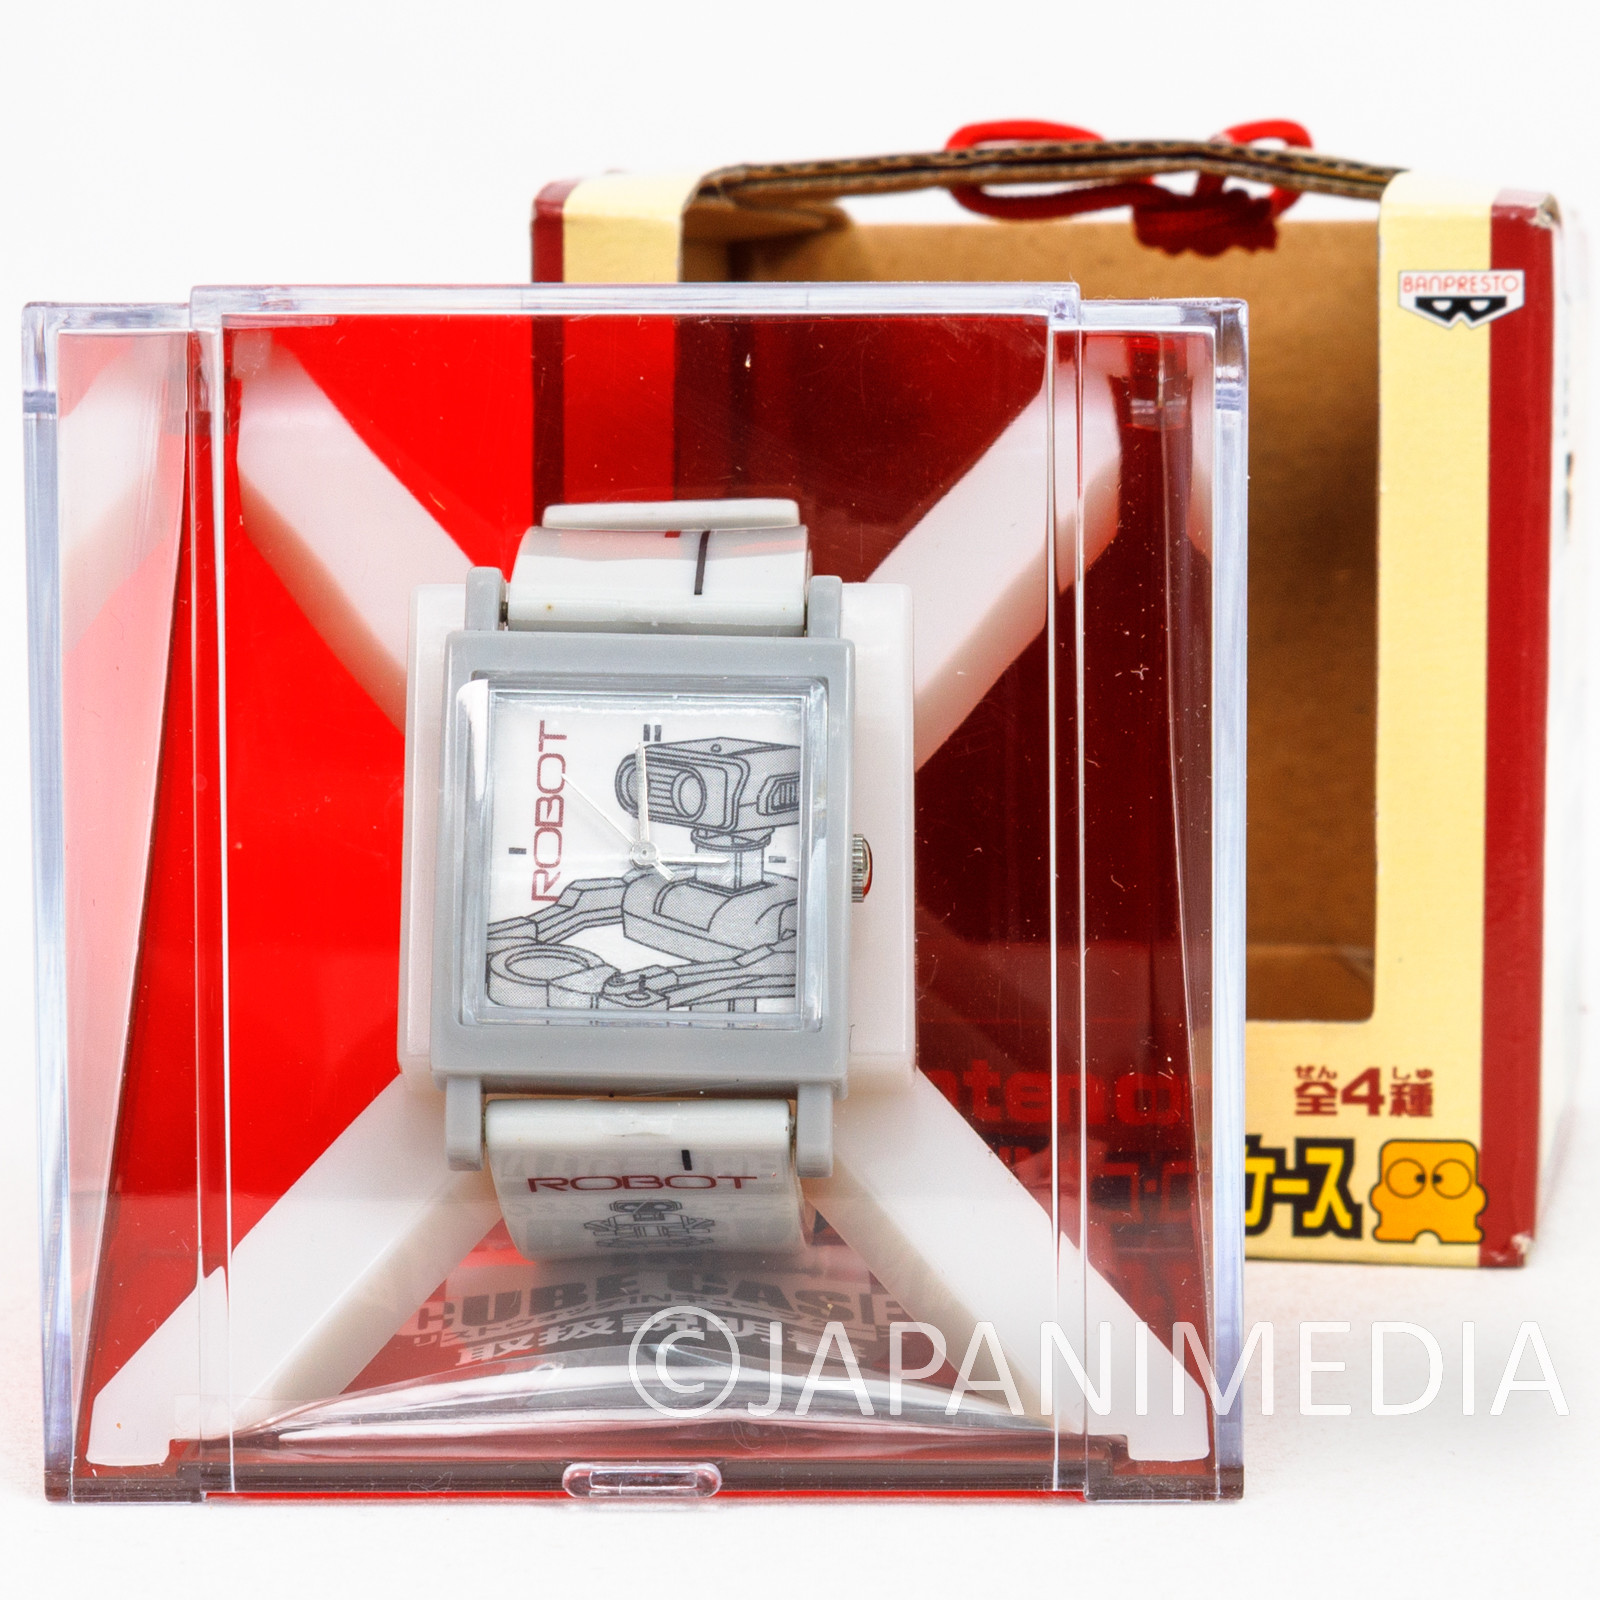 RARE Nintendo Wrist watch In Cube Case Famicom Robot Banpresto JAPAN GAME NES